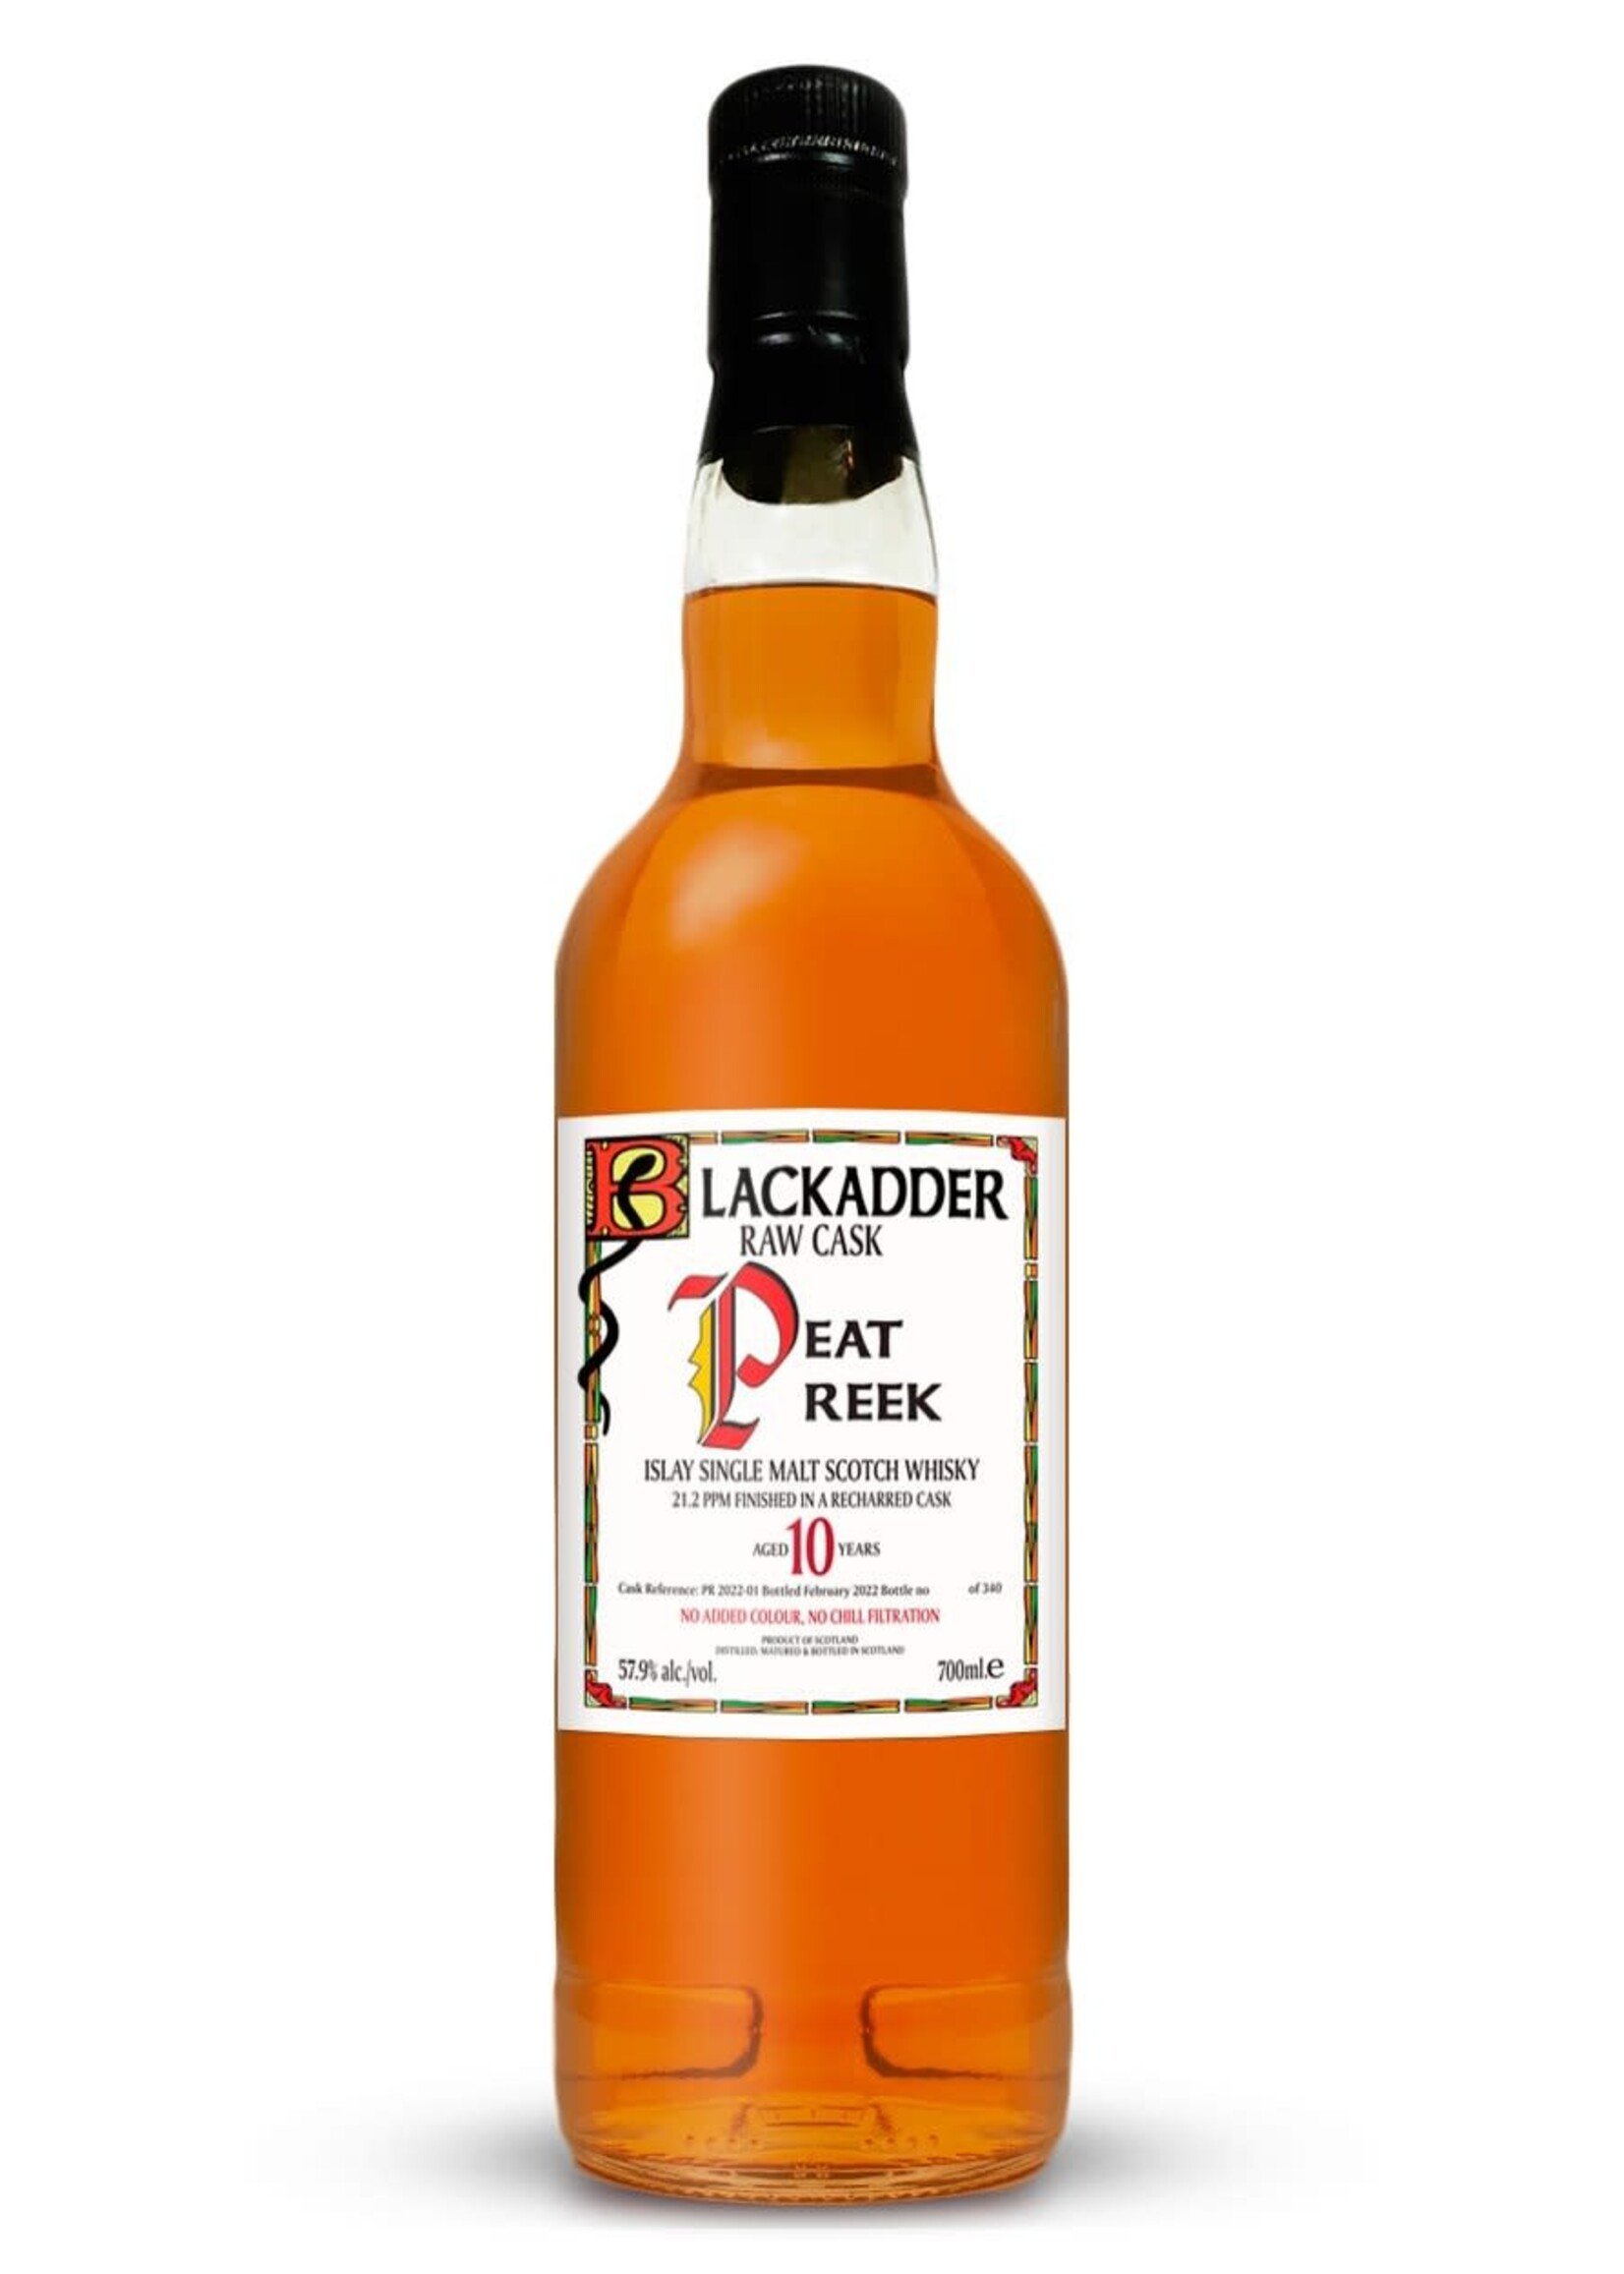 Blackadder Blackadder / Peat Reek 10 Year Recharred Cask Finish Islay Single Malt Scotch Whisky 57.9% abv / 700mL